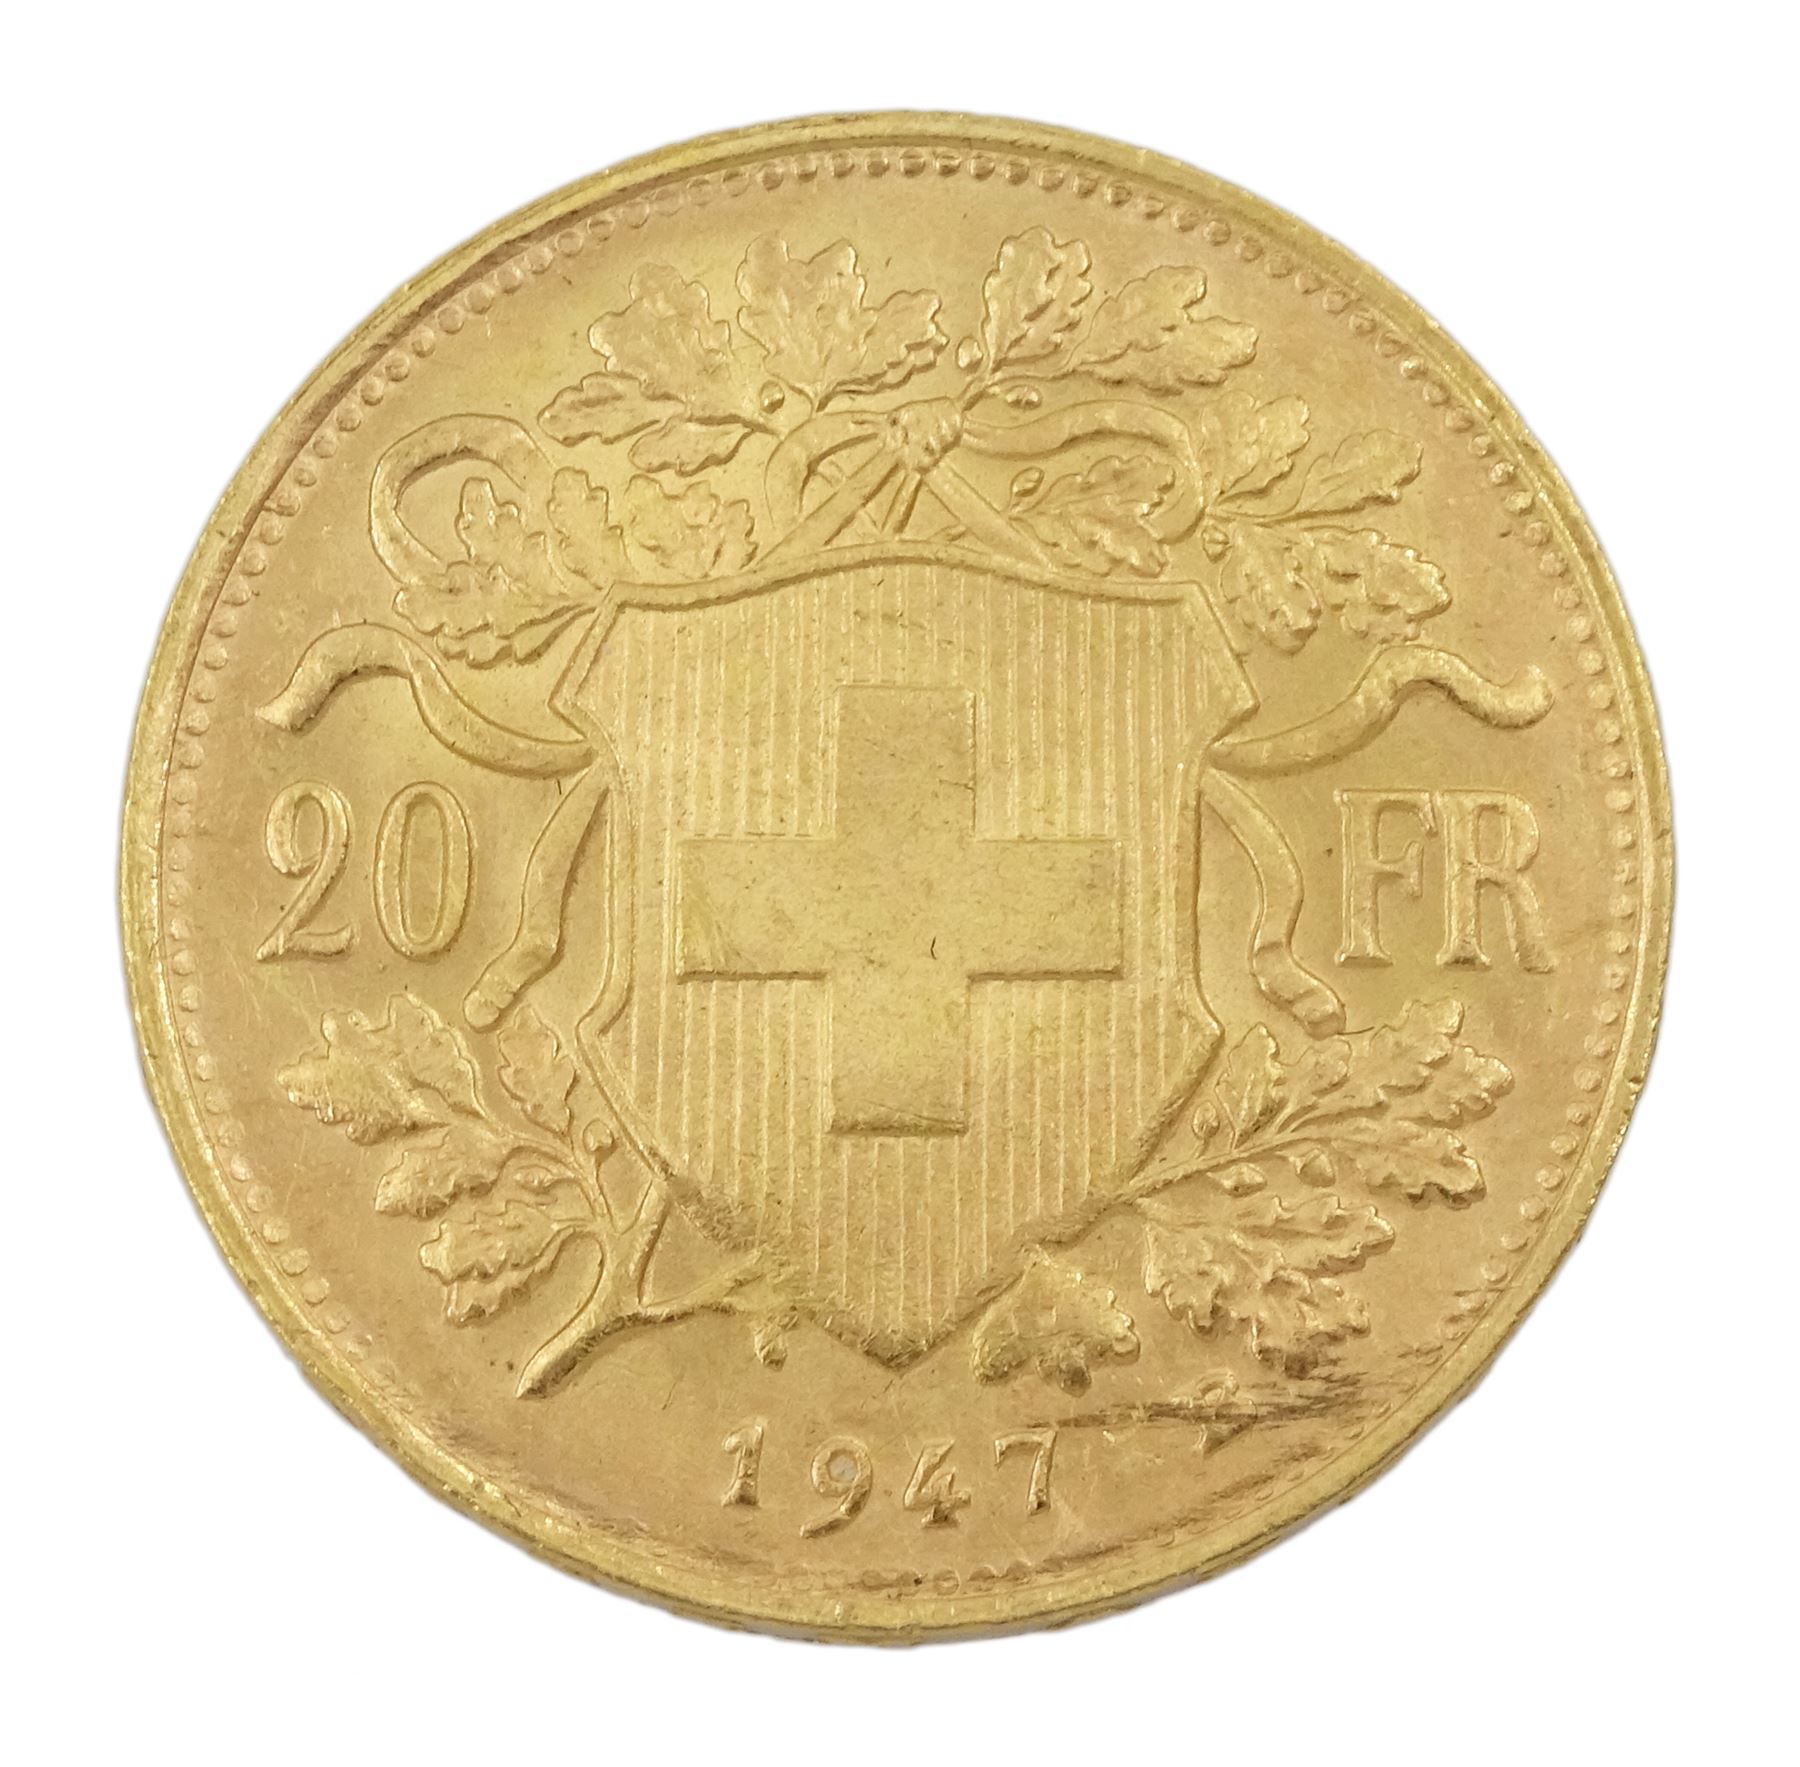 Swiss 1947 gold twenty francs coin - Image 2 of 2